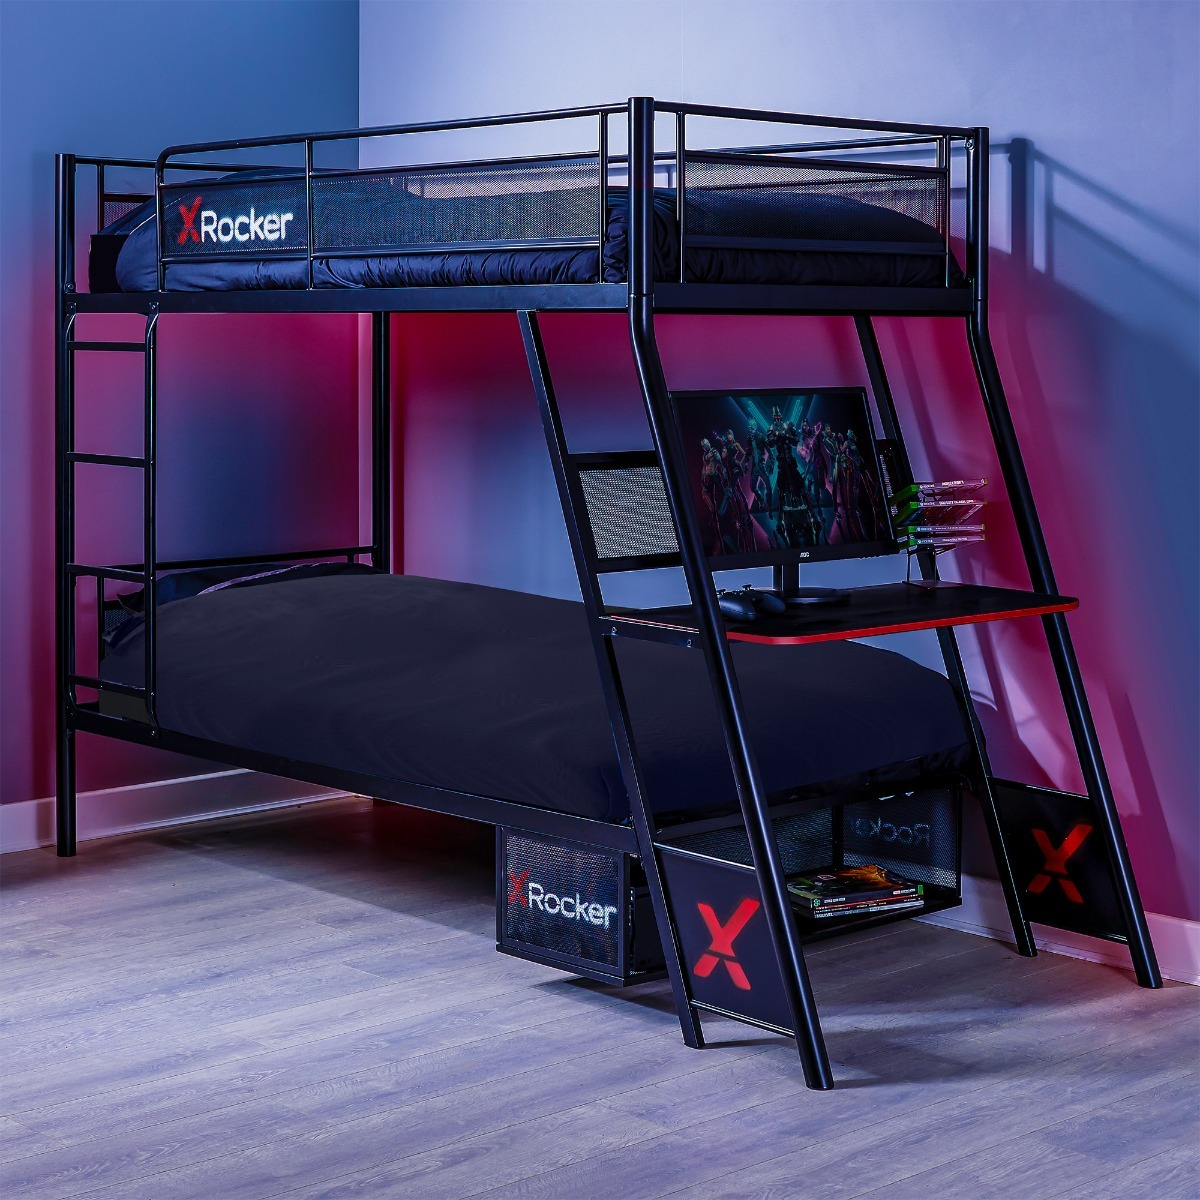 X Rocker Armada Gaming Bunk Bed With Desk - image 1